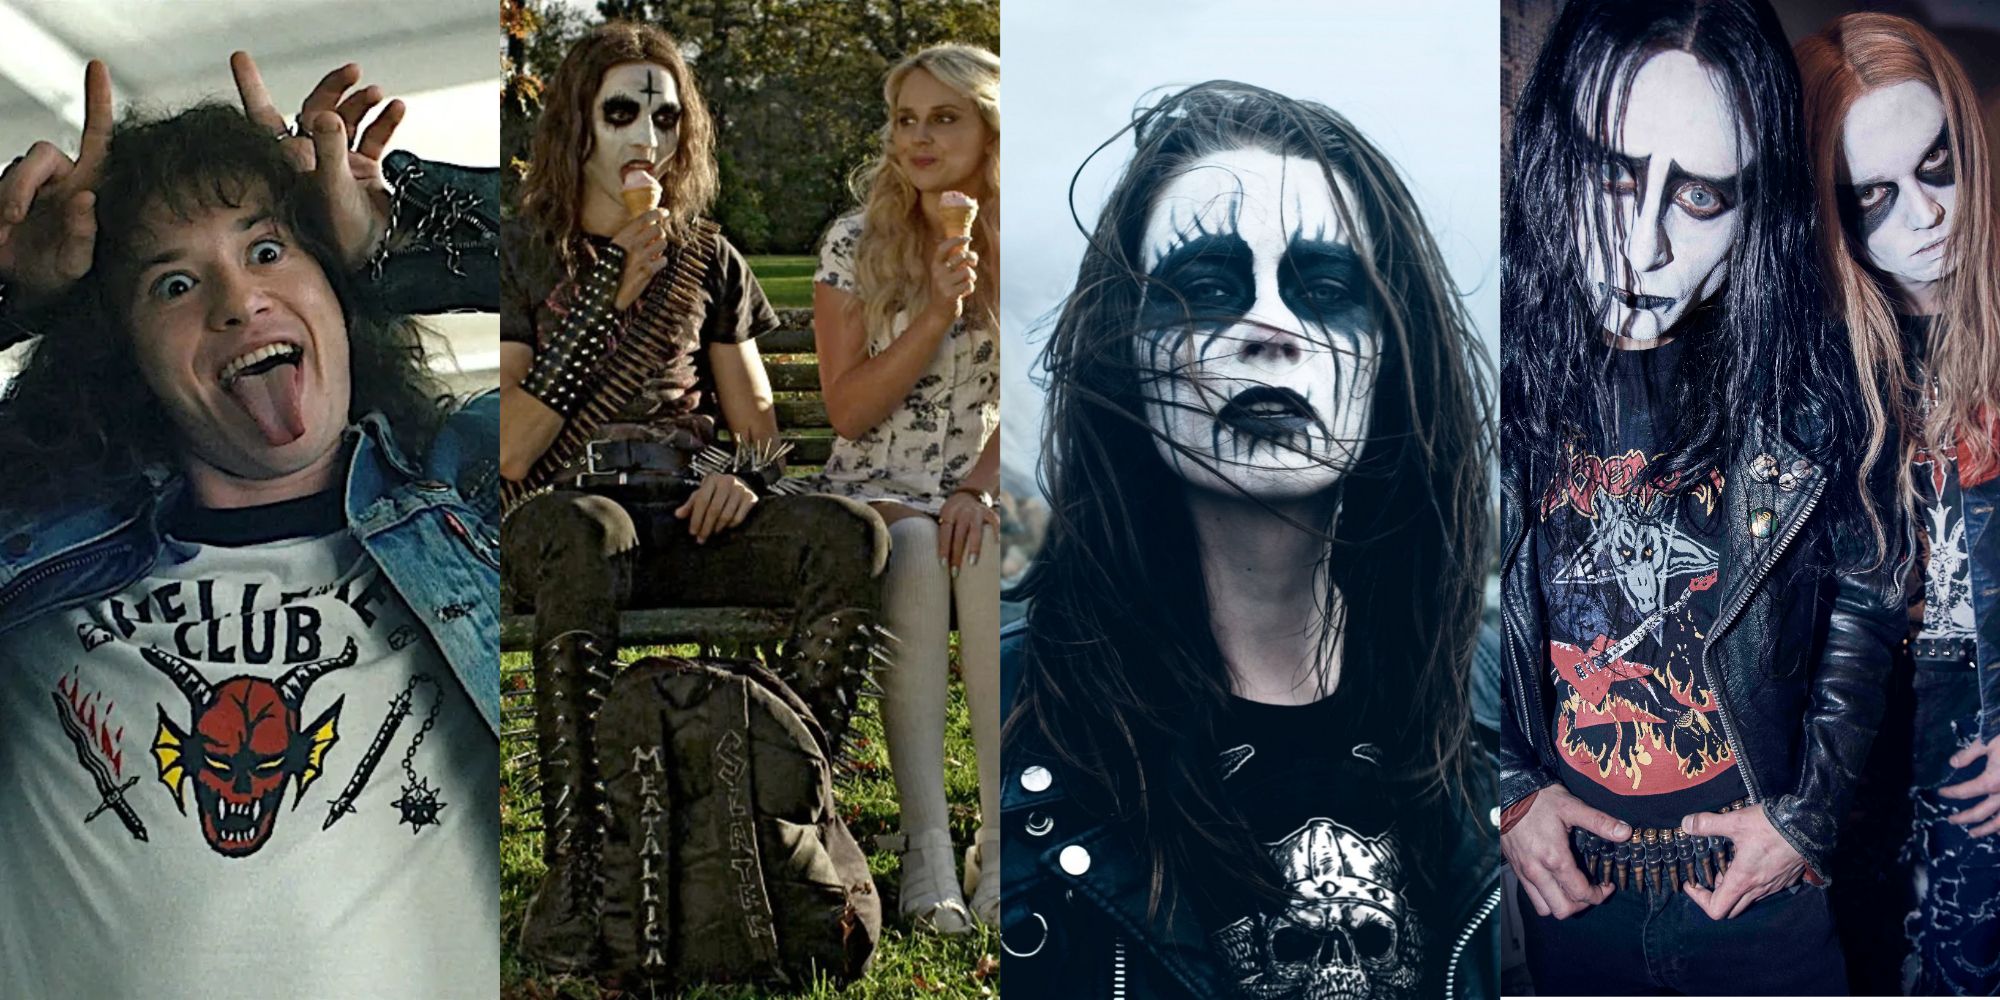 Stranger Things' Eddie Munson, Deathgasm's Zakk, Metalhead's Hera, and Lords of Chaos' Euronymous.